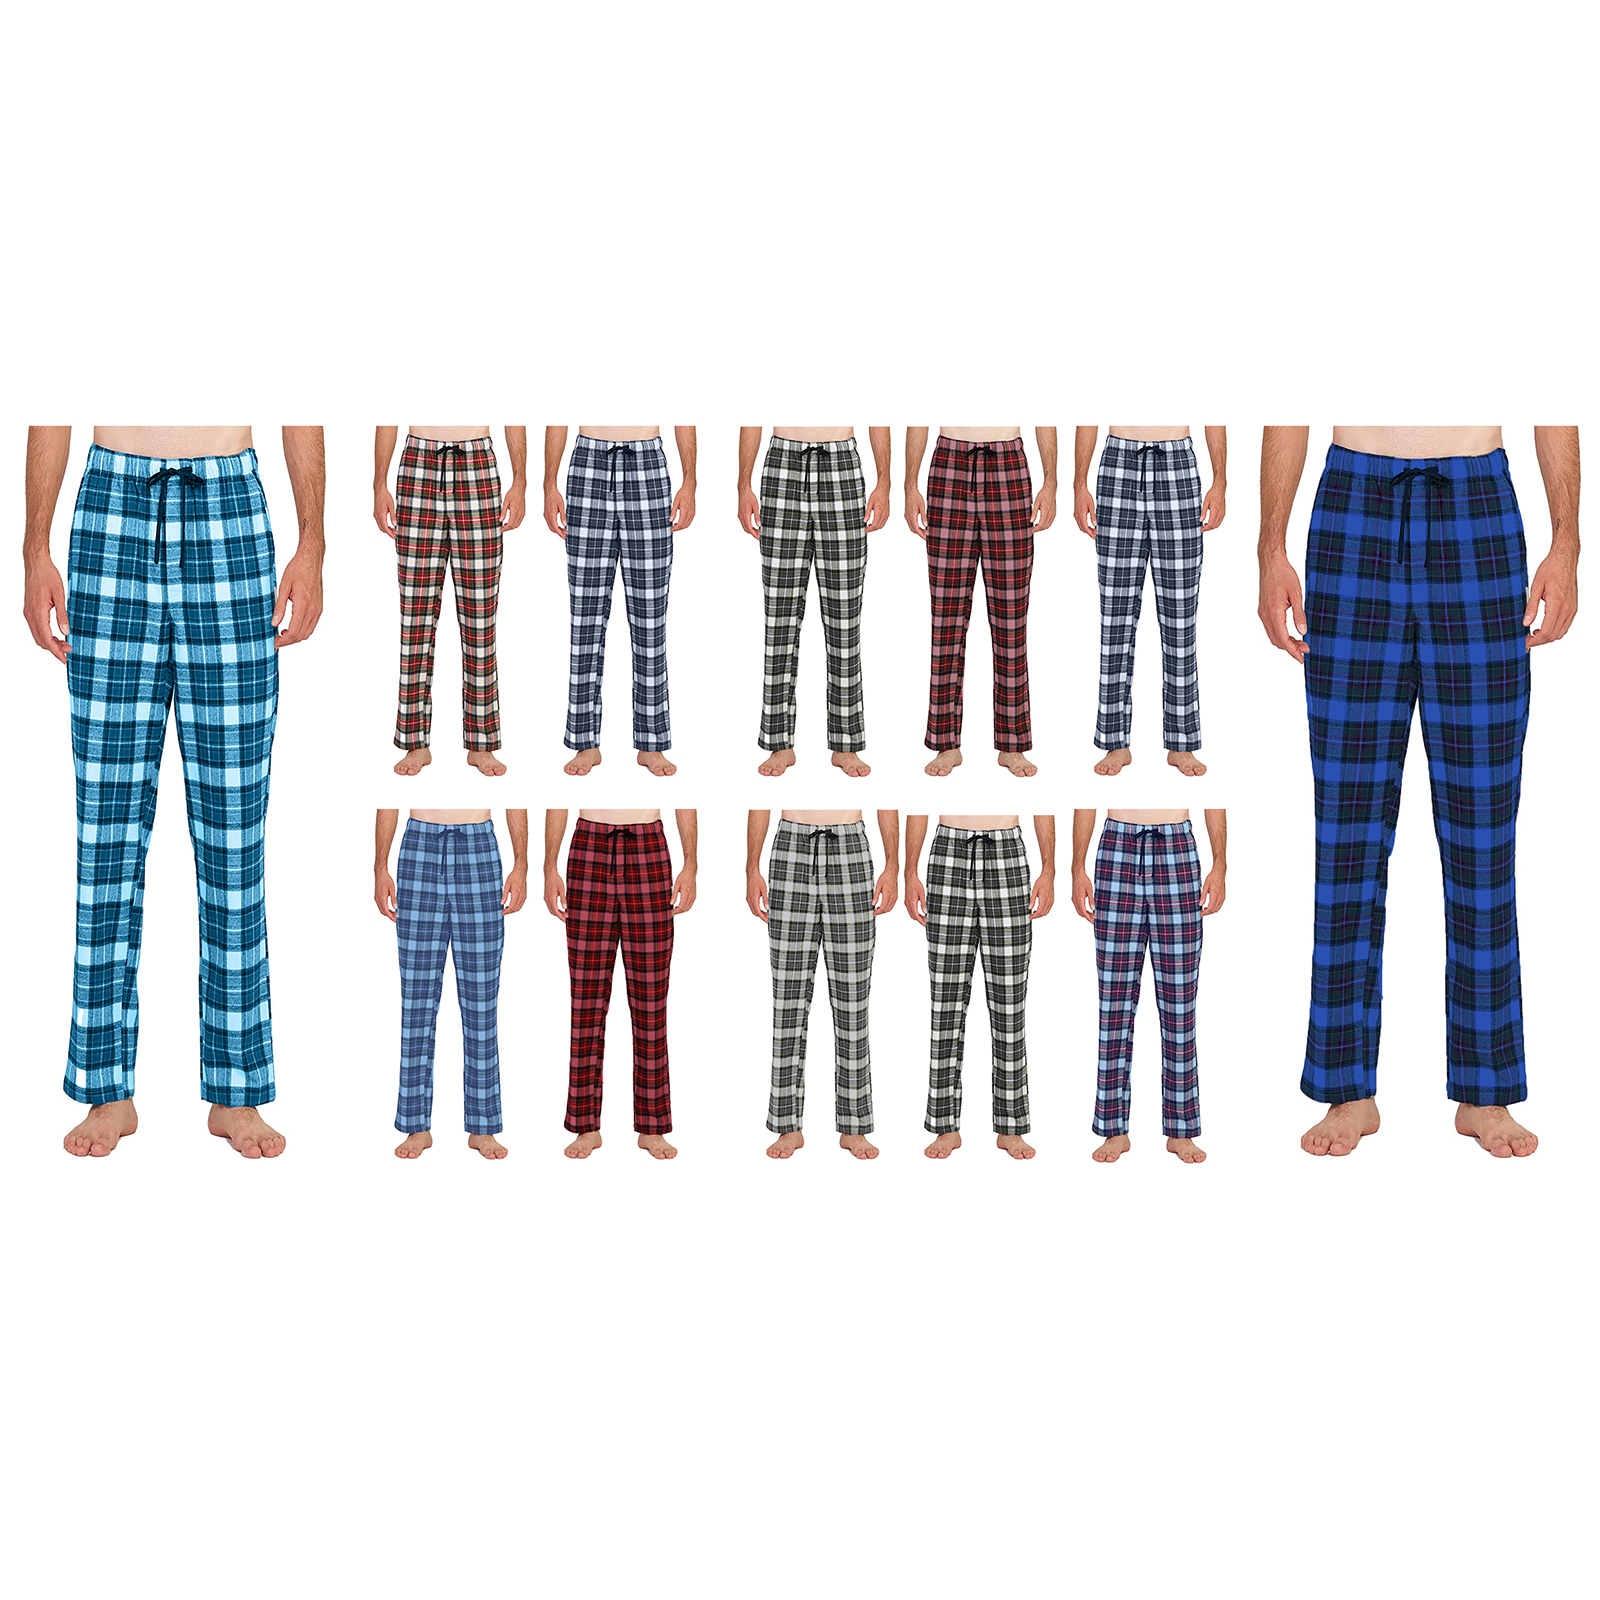 Men's Soft 100% Cotton Flannel Plaid Lounge Pajama Sleep Pants - 1-Pack, X-Large